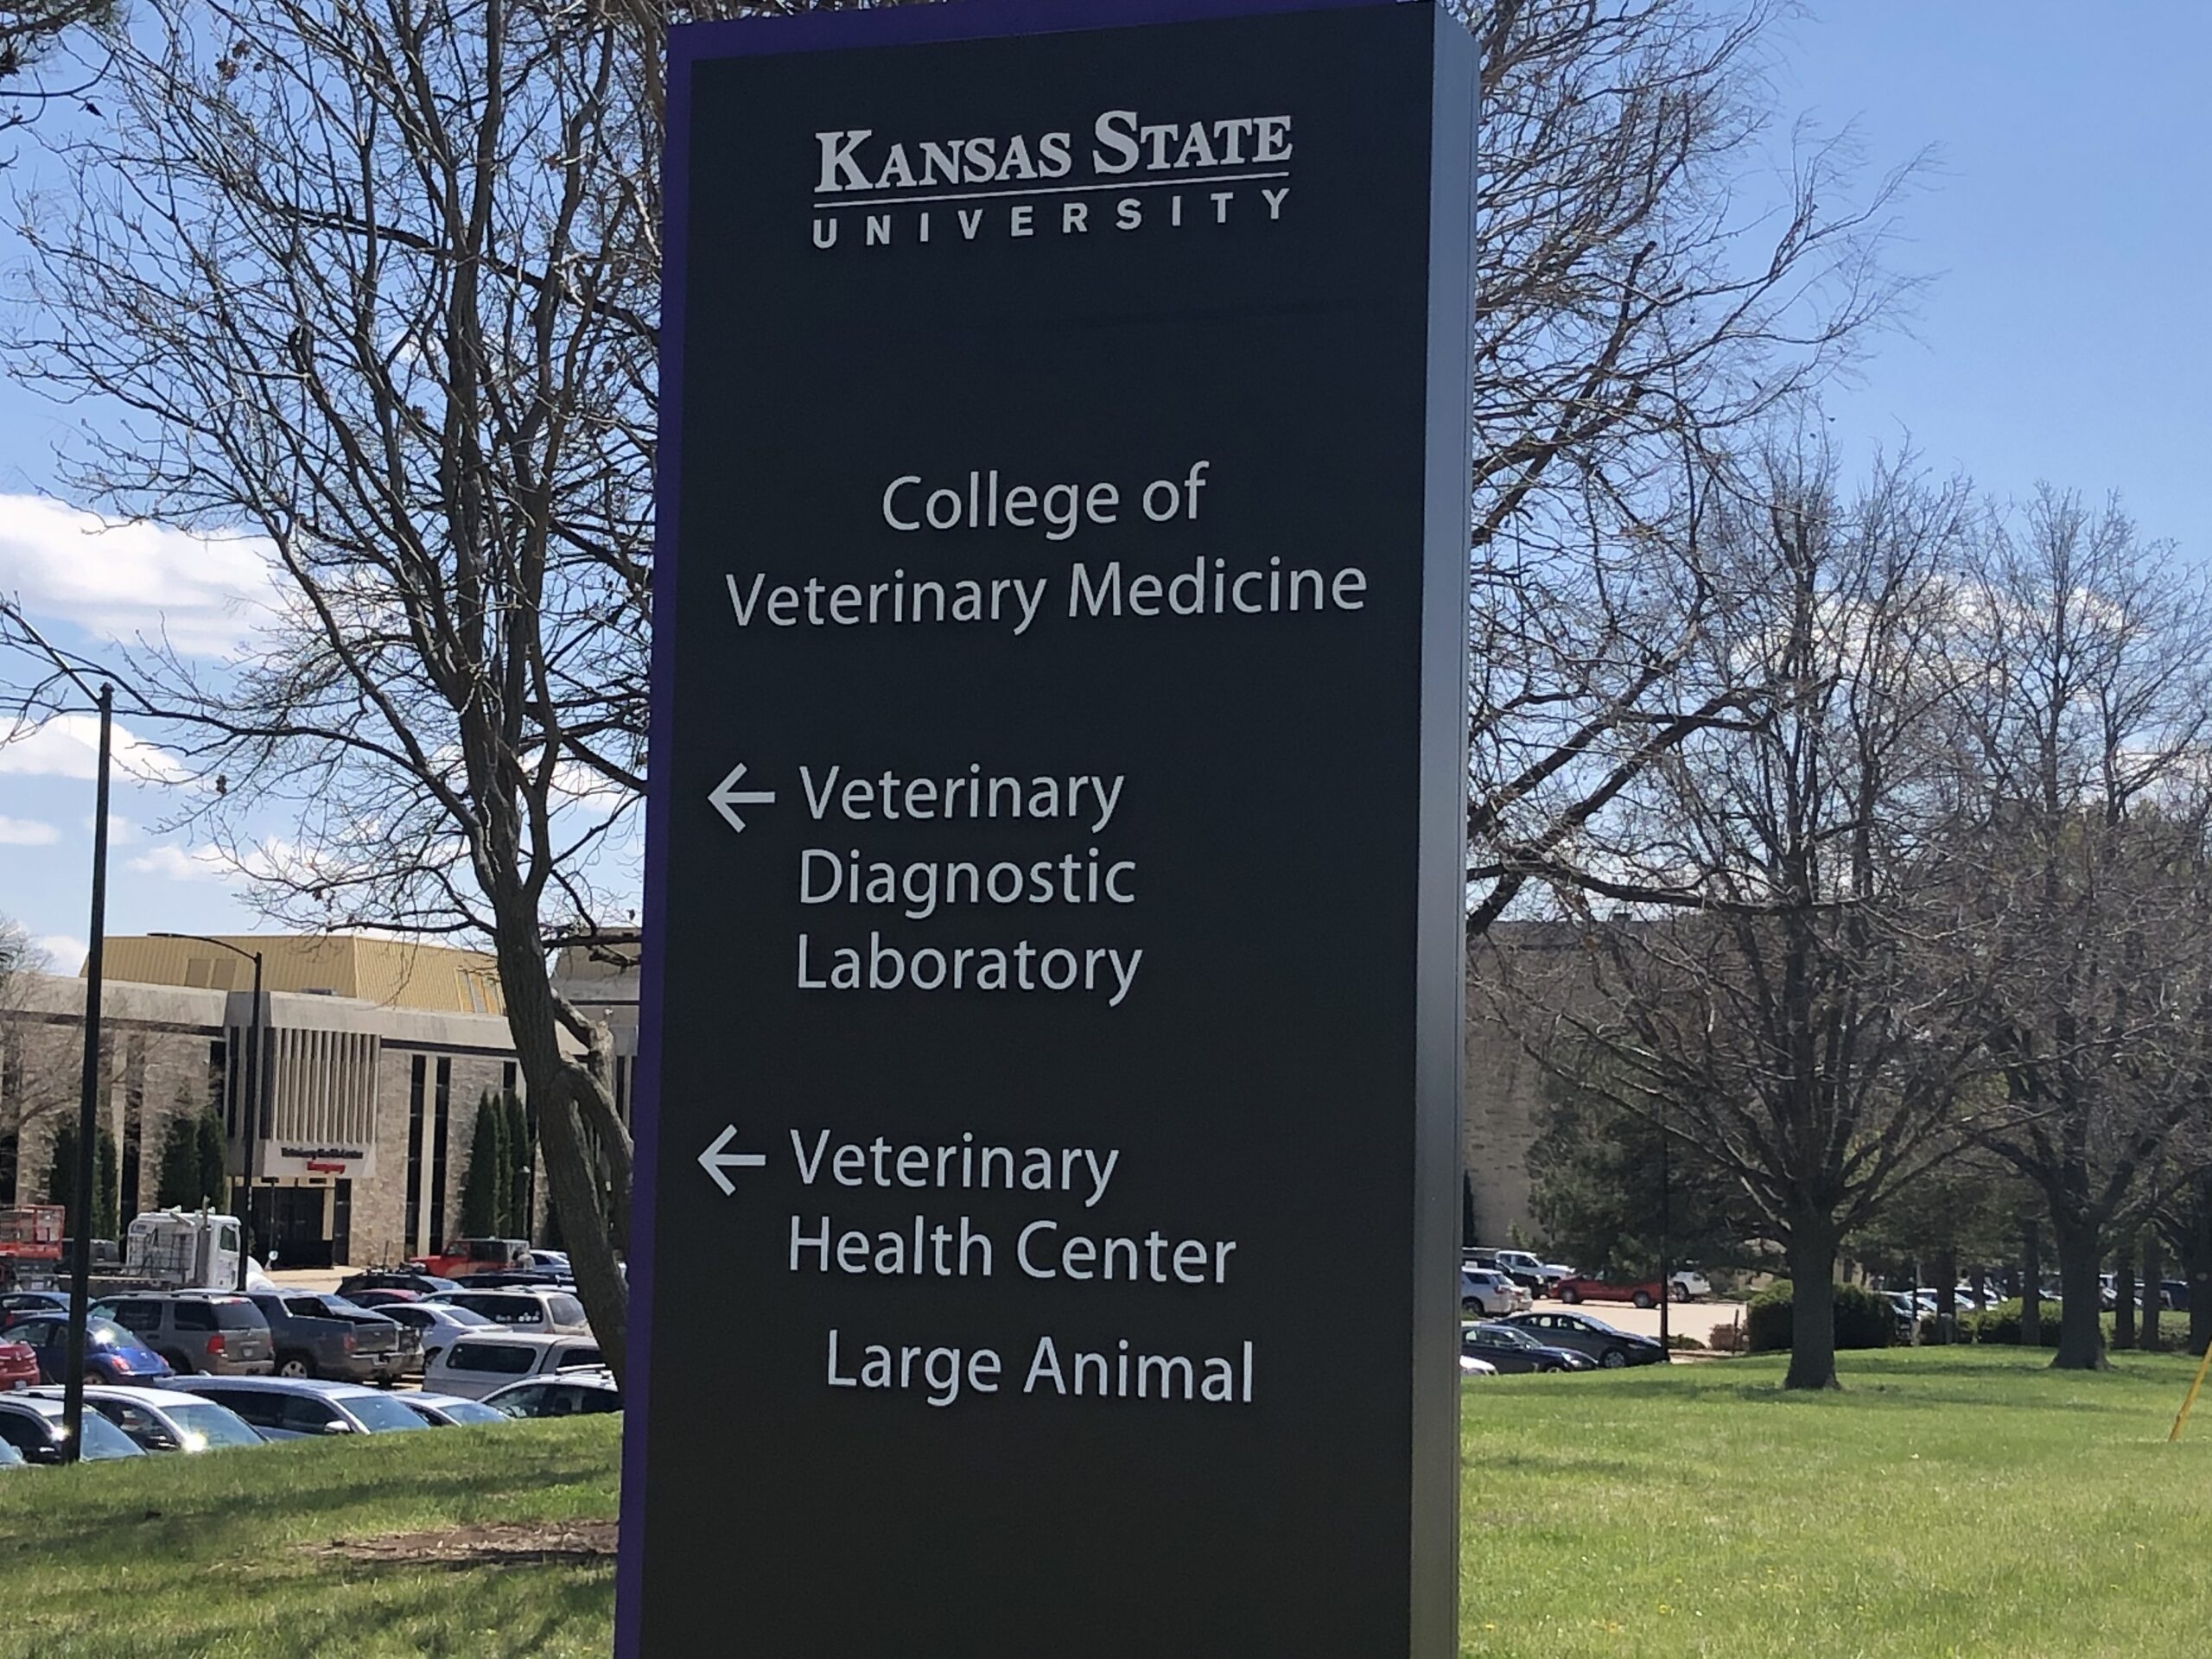 House passes bill to expand K-State veterinary training program – News Radio KMAN